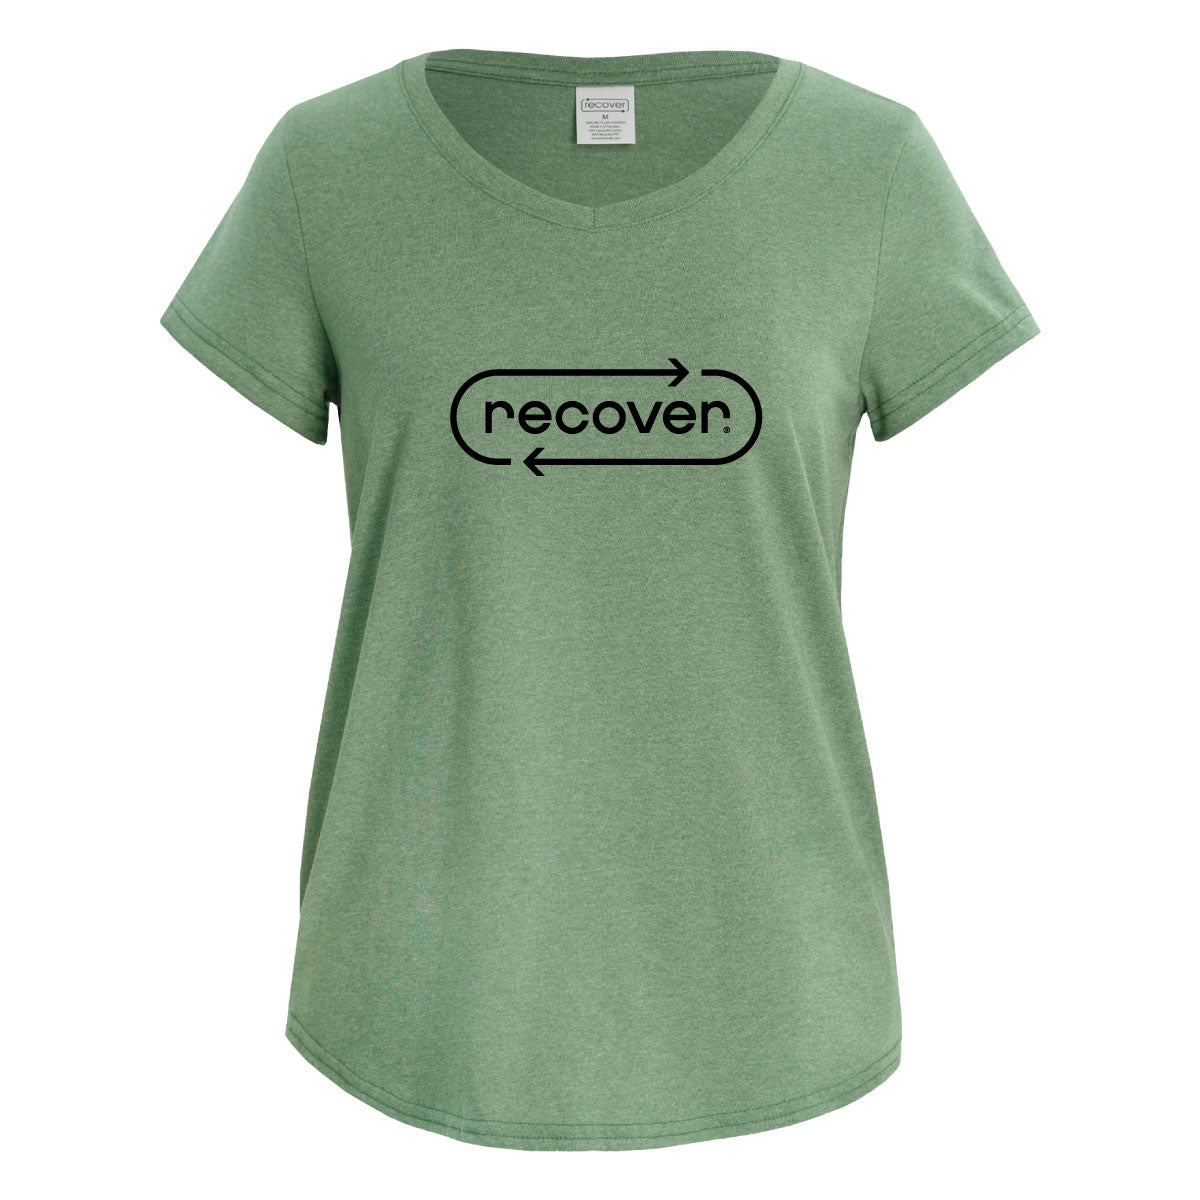 EC200 - Responsible Women's Short Sleeve T-Shirt